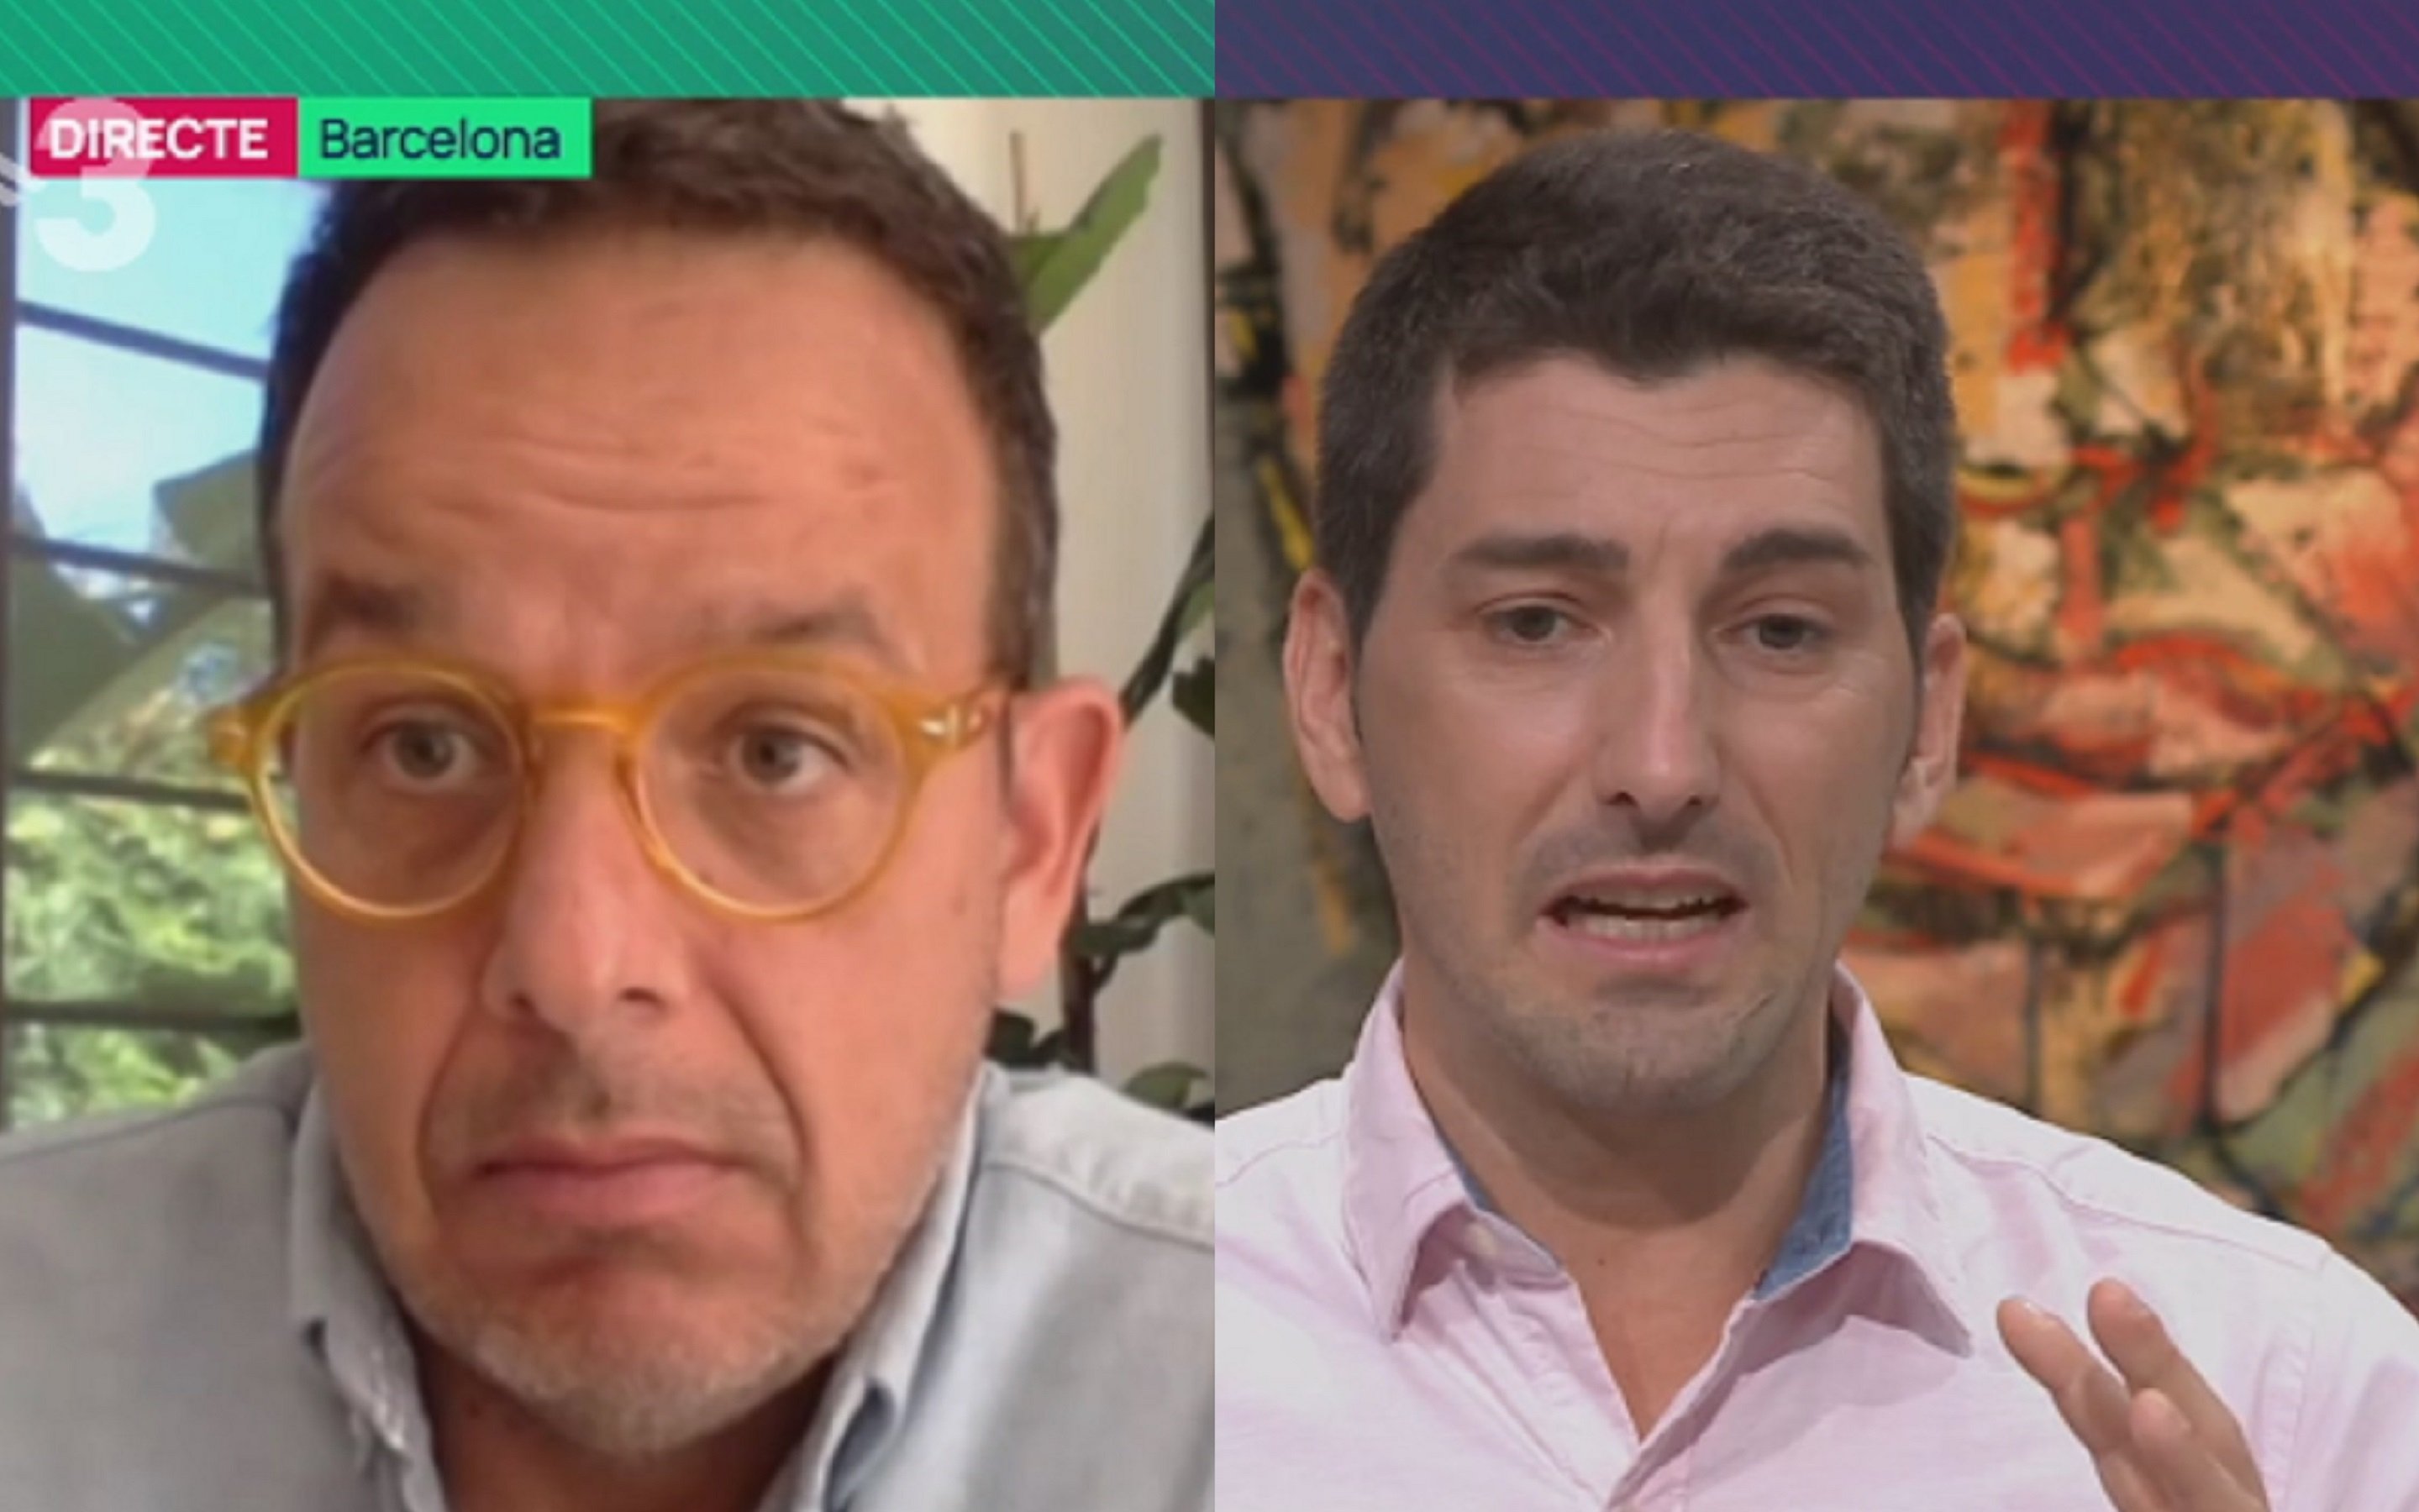 Cara a cara entre Llàcer y Mitjà en TV3: "No hago crítica banal e innecesaria"